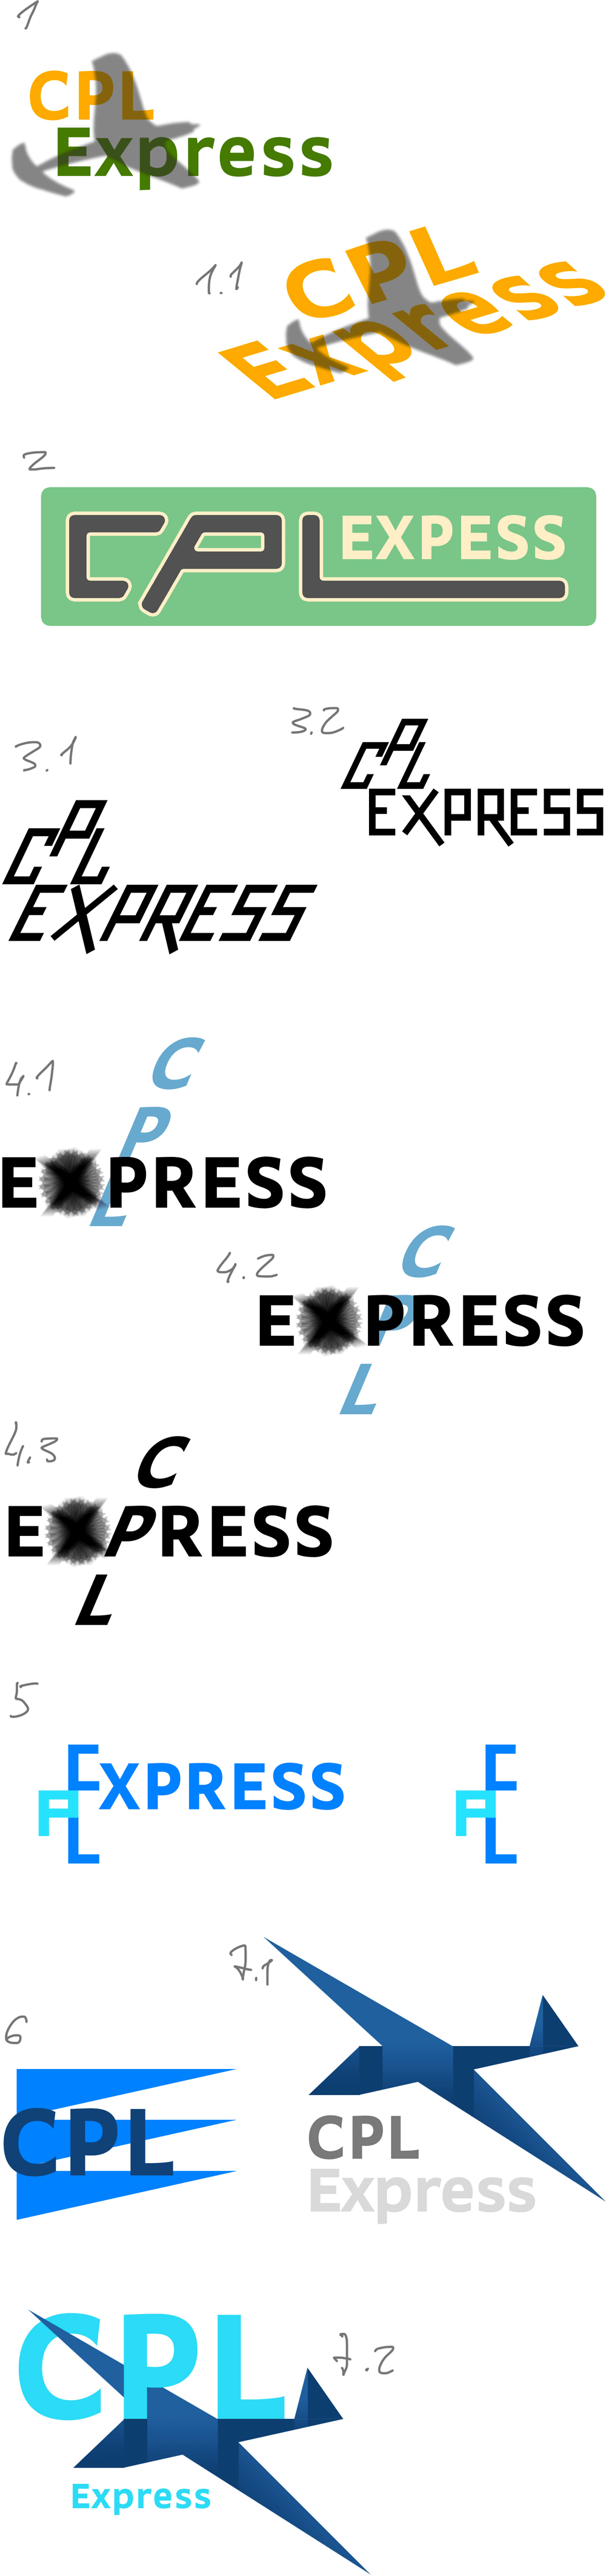 cpl express process 01